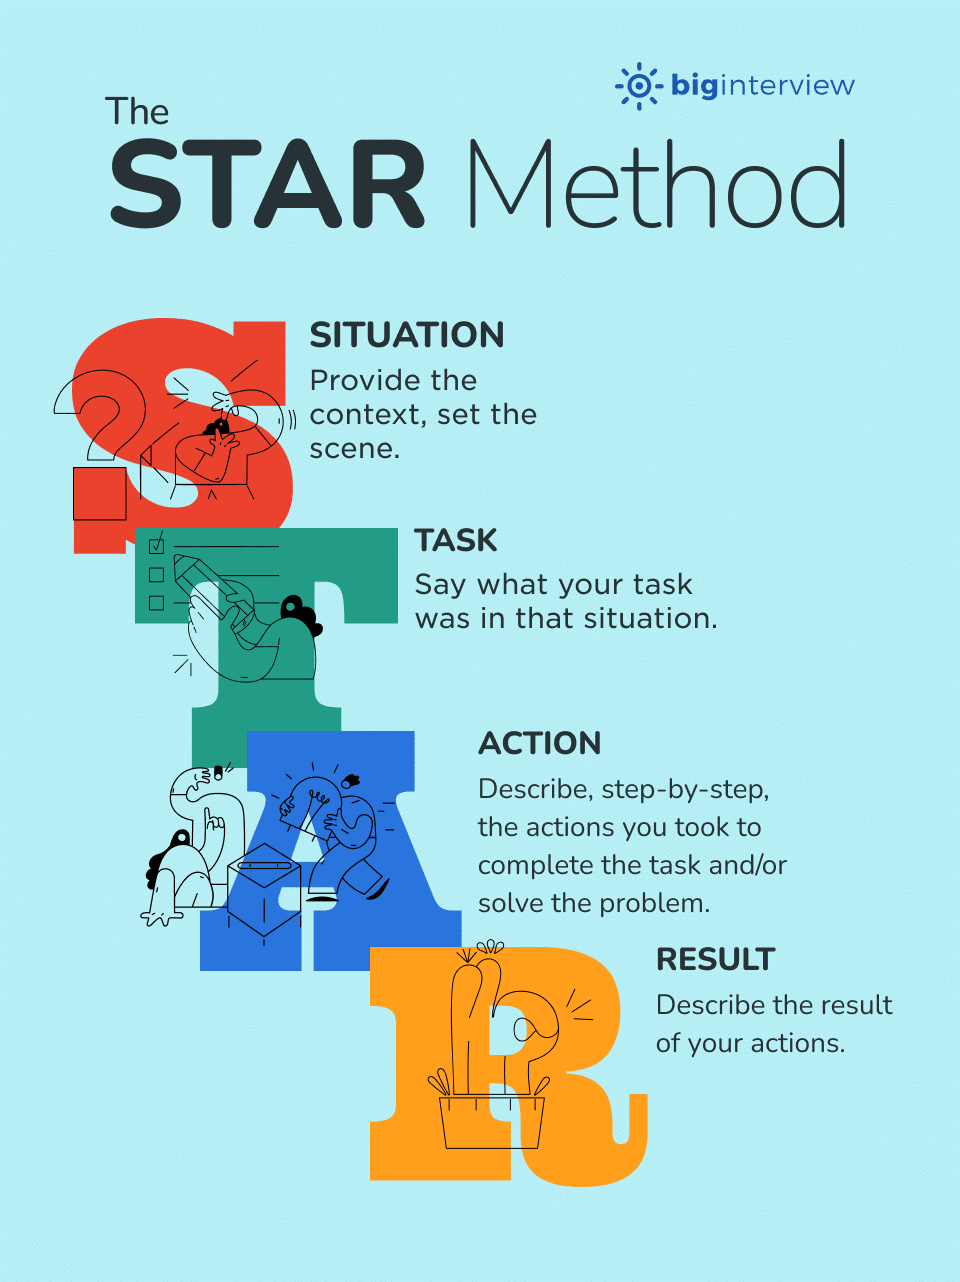 The STAR Method